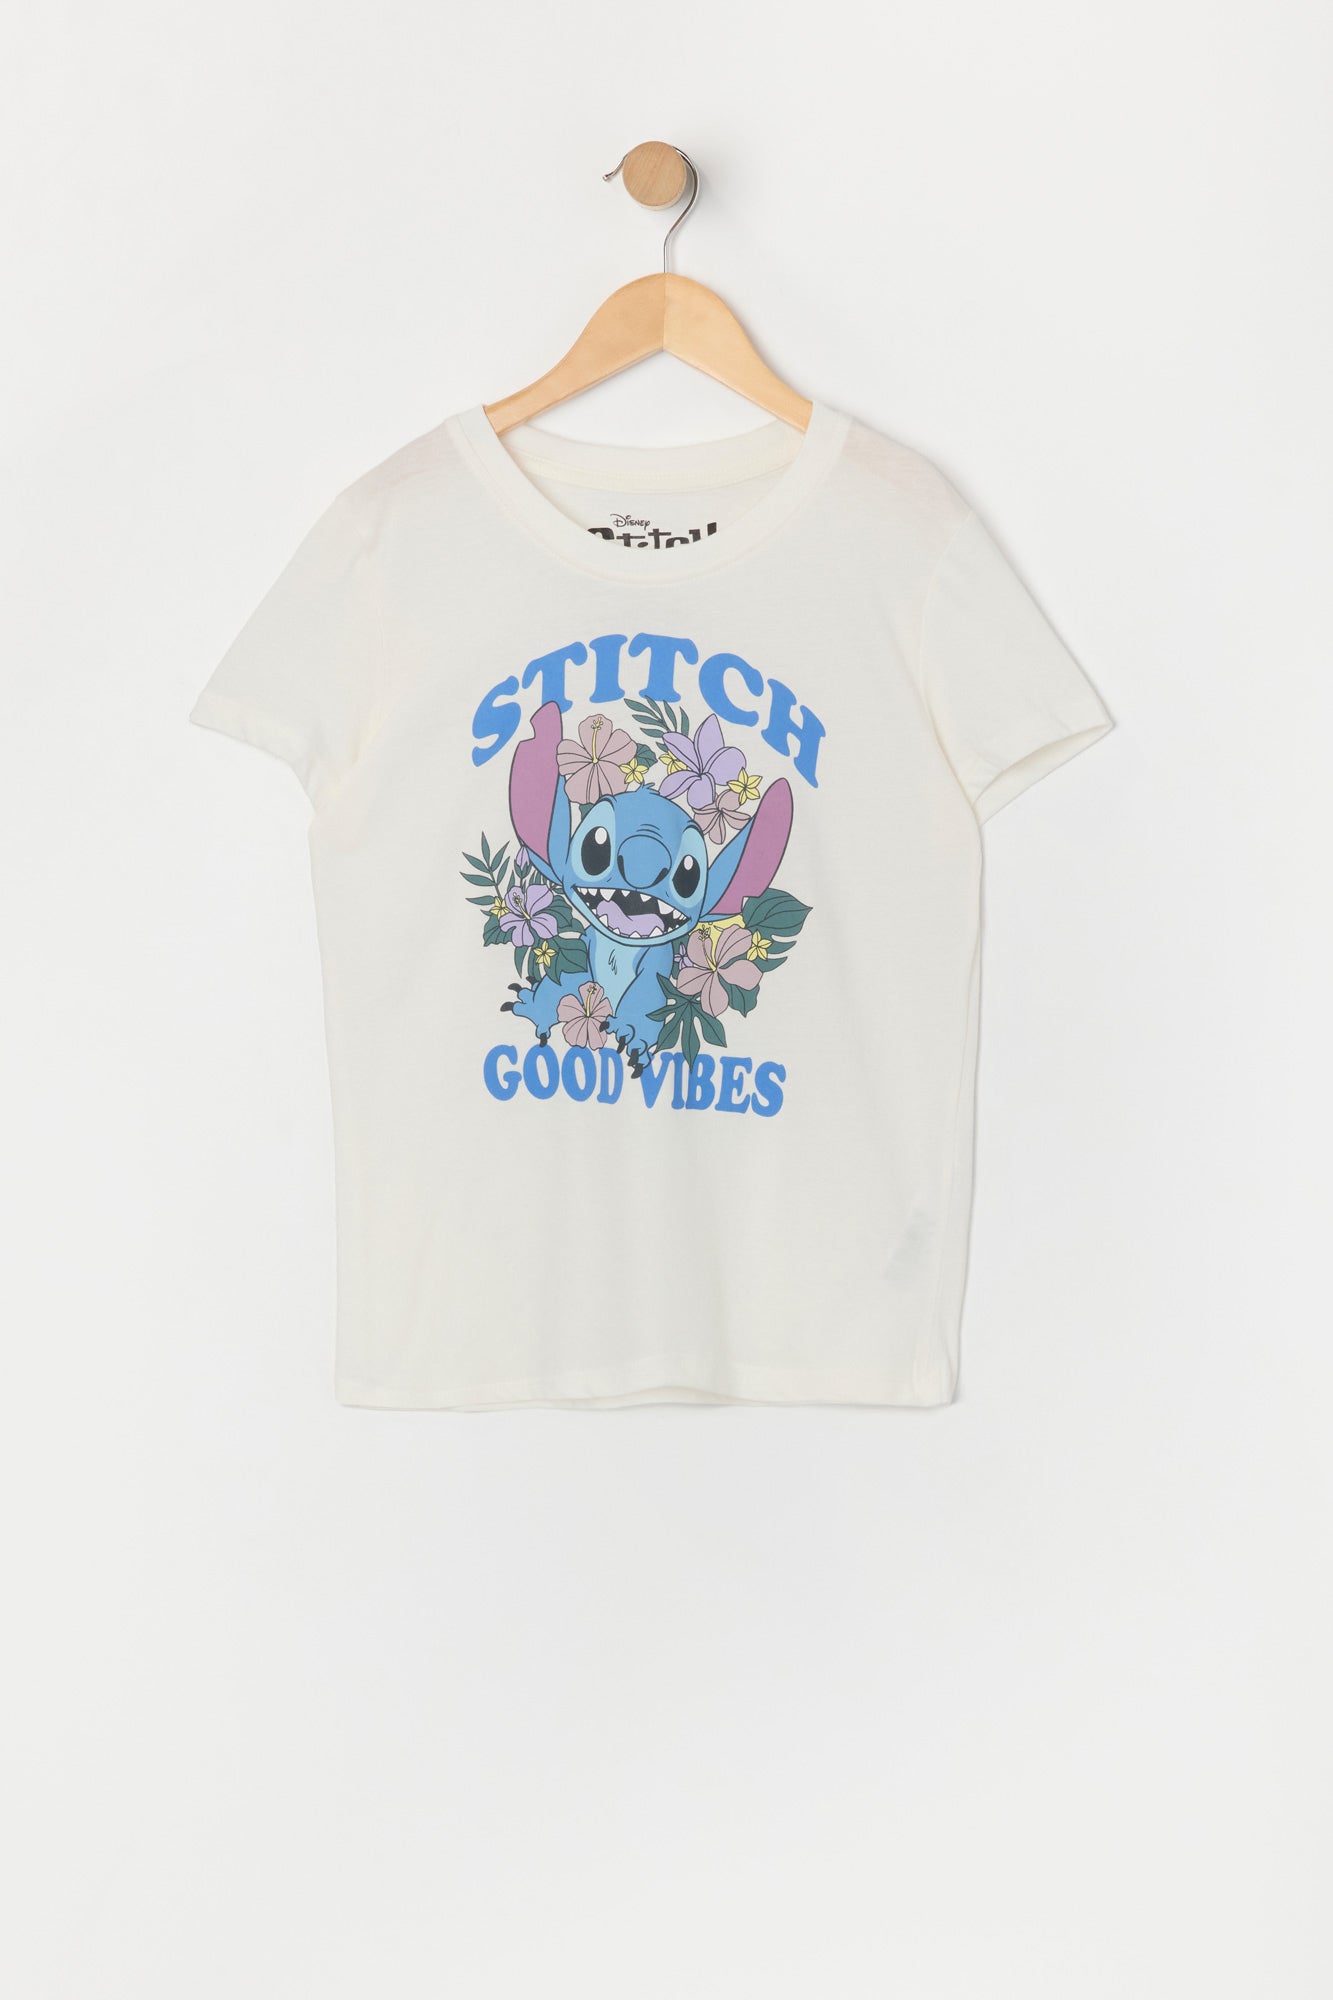 Girls Stitch Good Vibes Graphic T-Shirt